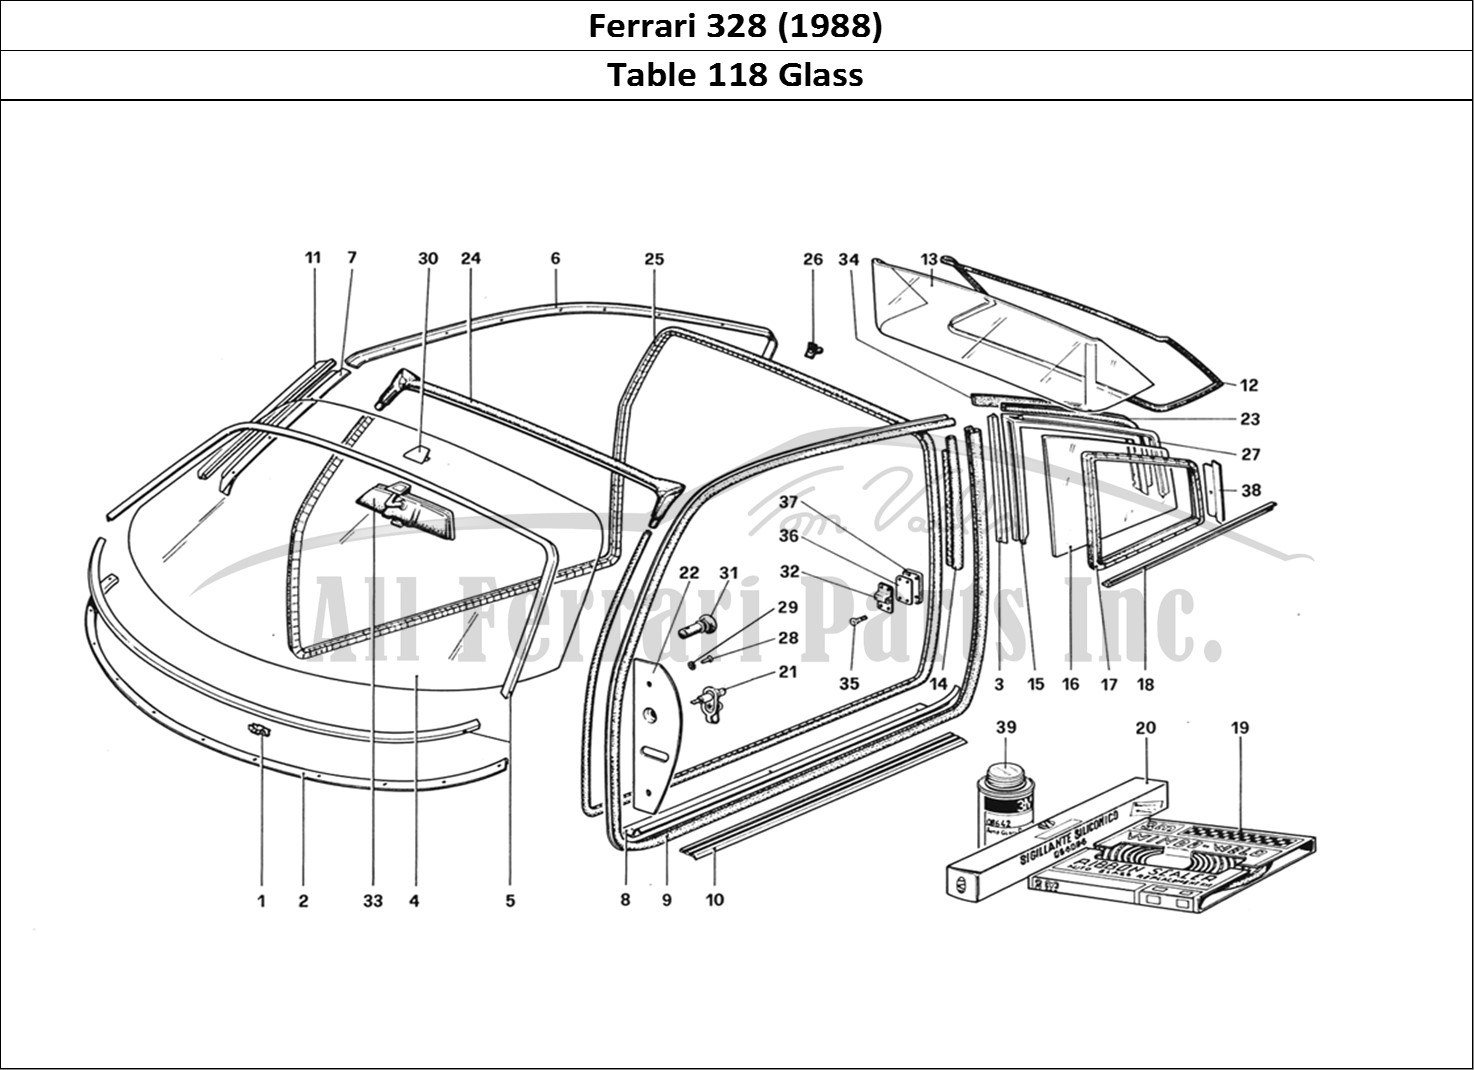 Ferrari Parts Ferrari 328 (1988) Page 118 Glasses